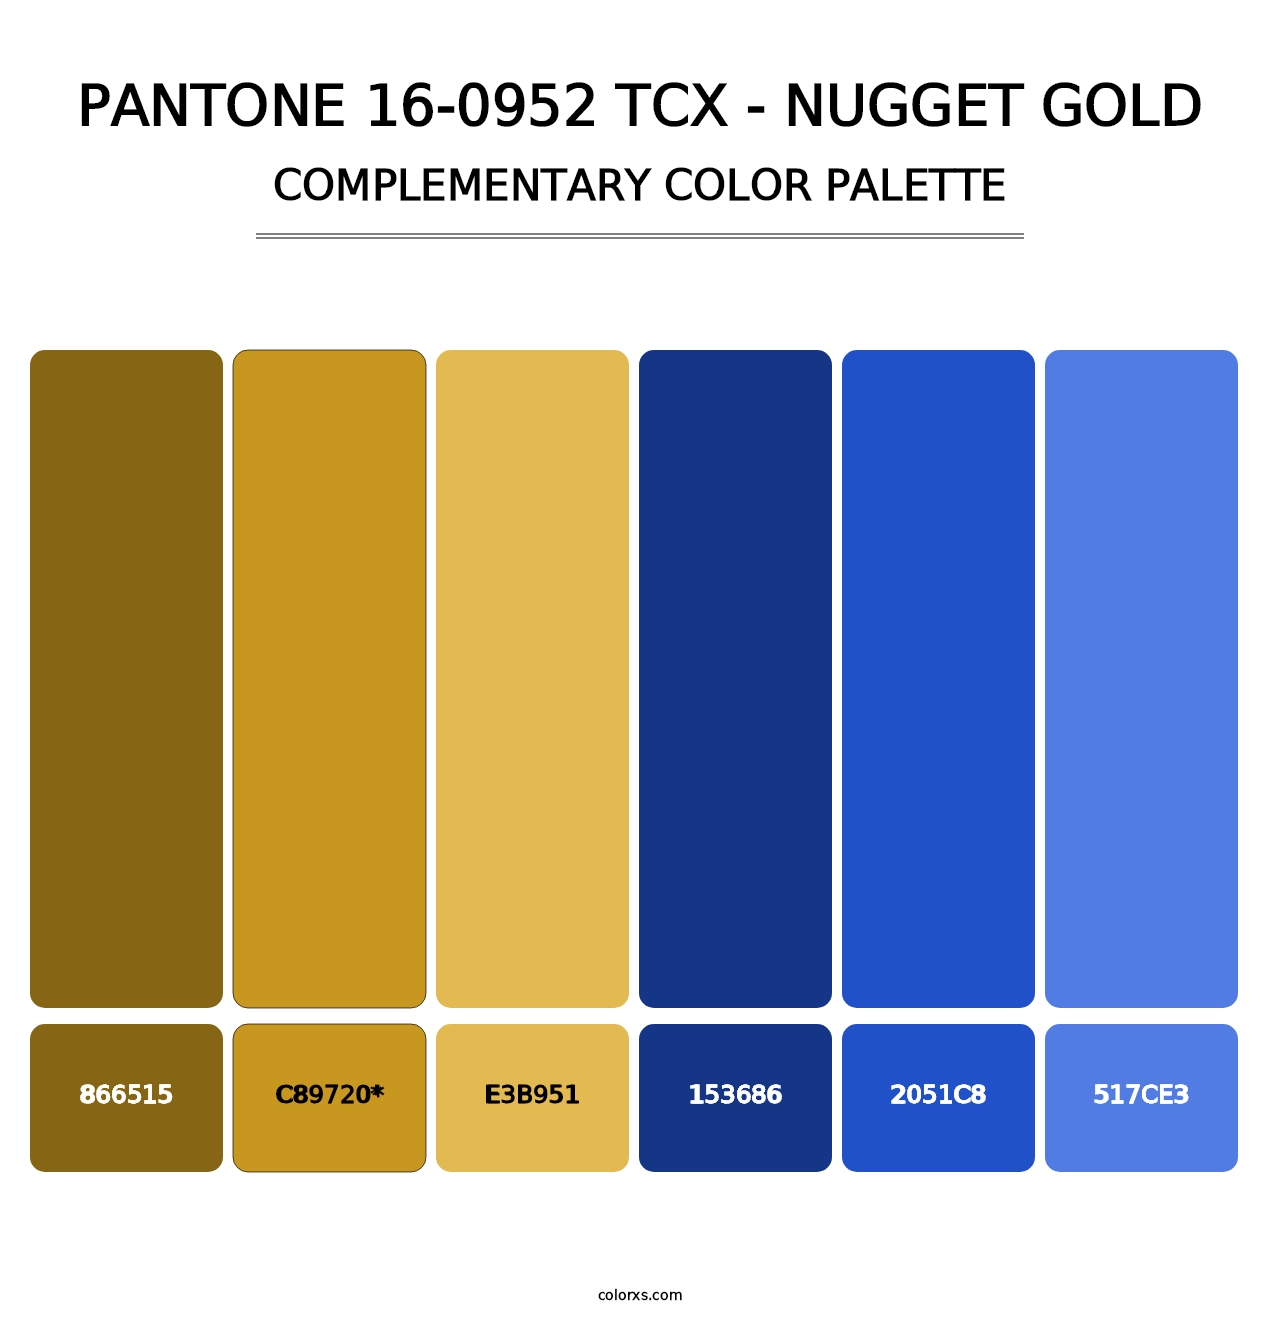 PANTONE 16-0952 TCX - Nugget Gold - Complementary Color Palette